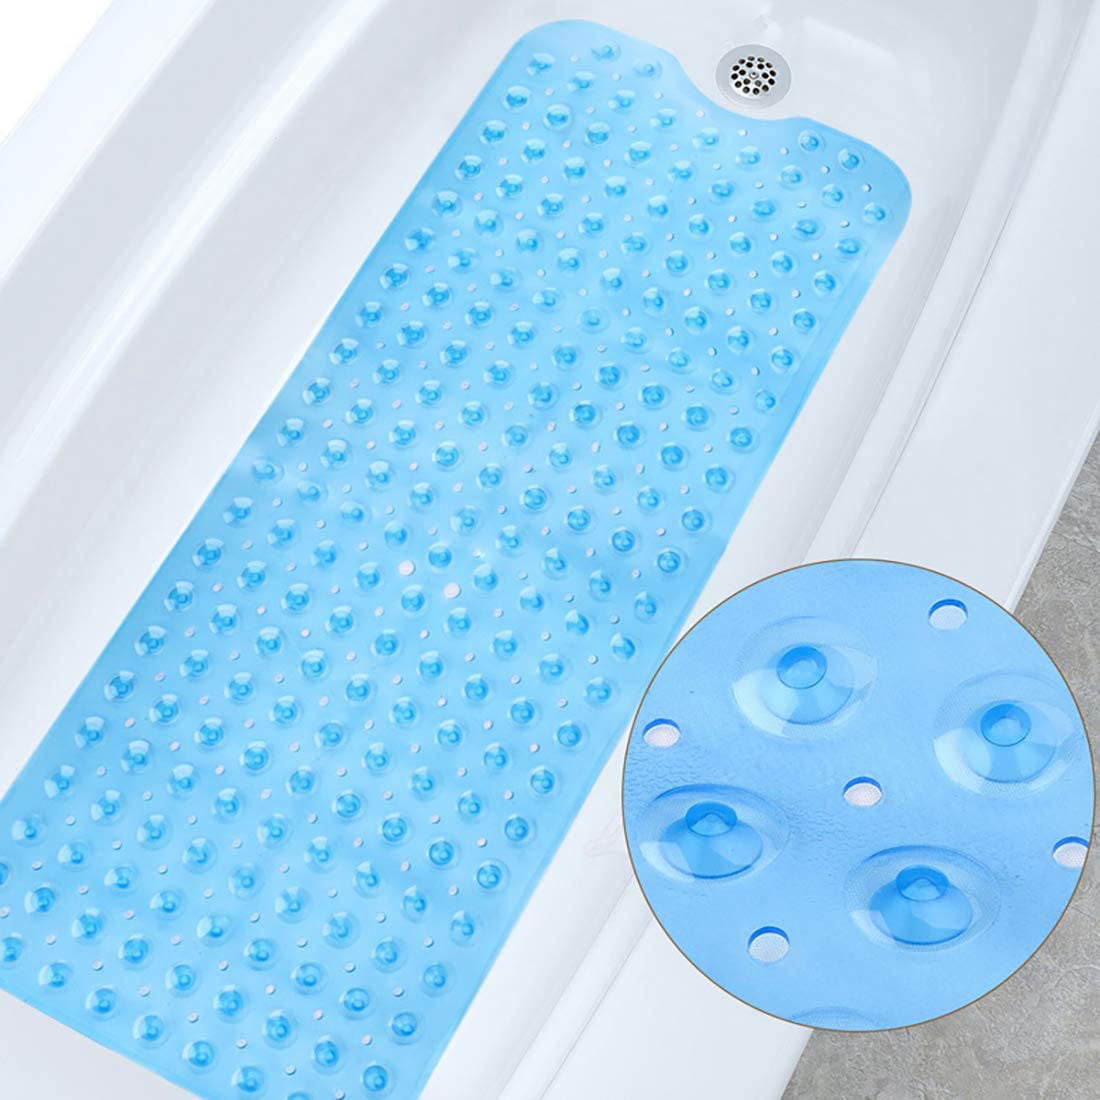 ANSIO Long Bath Mat Bathtub Non-Slip Anti Mould Rubber Shower Mat with Drain Holes & Suction Cups Machine Washable 40 x 100 cm 15.8 x 39.4 inches White